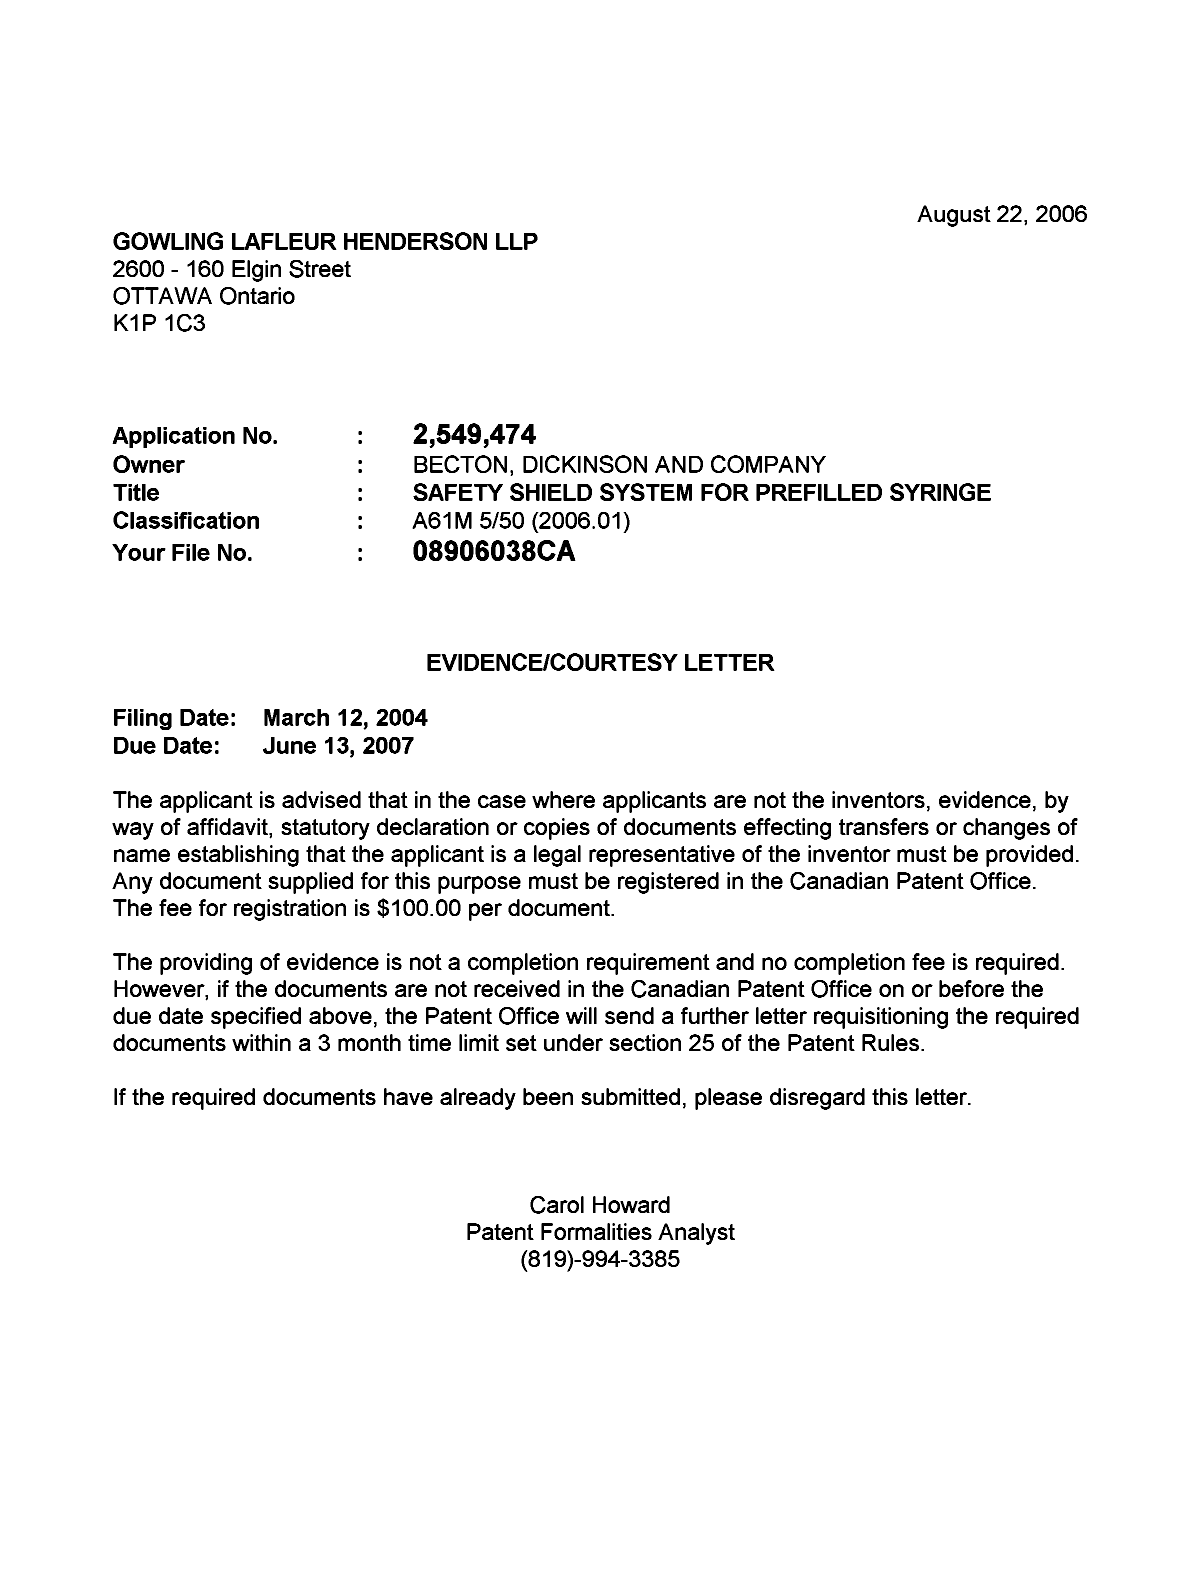 Canadian Patent Document 2549474. Correspondence 20060821. Image 1 of 1